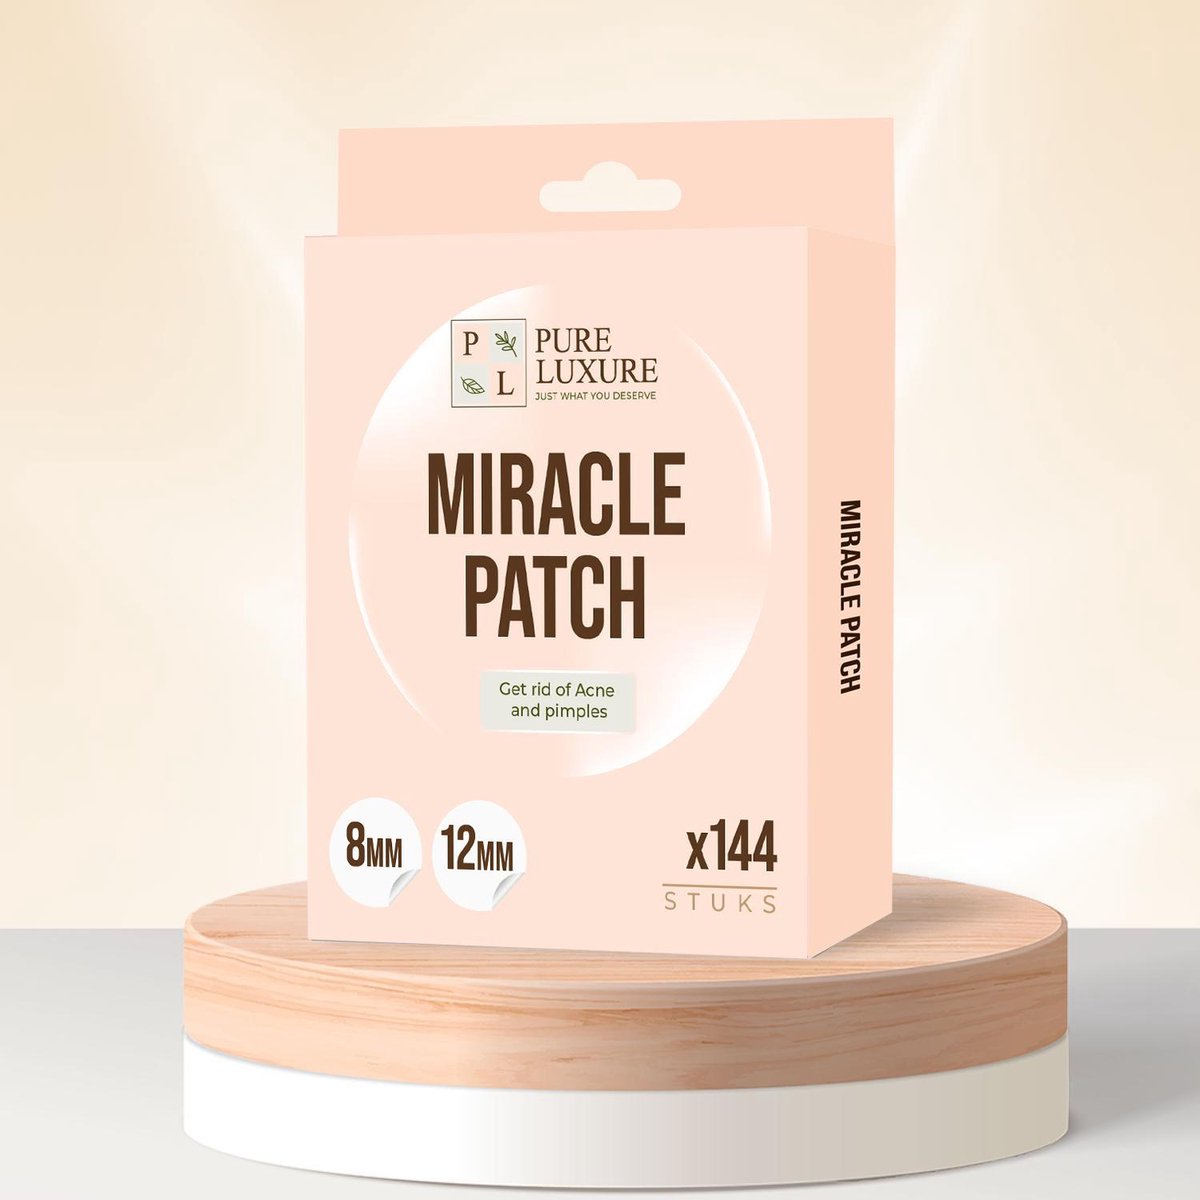 Pimple patch 144 ST - Acne patch - Acne - Acne pleister - Pimple patches - Puisten verwijderaar - Pure Luxure